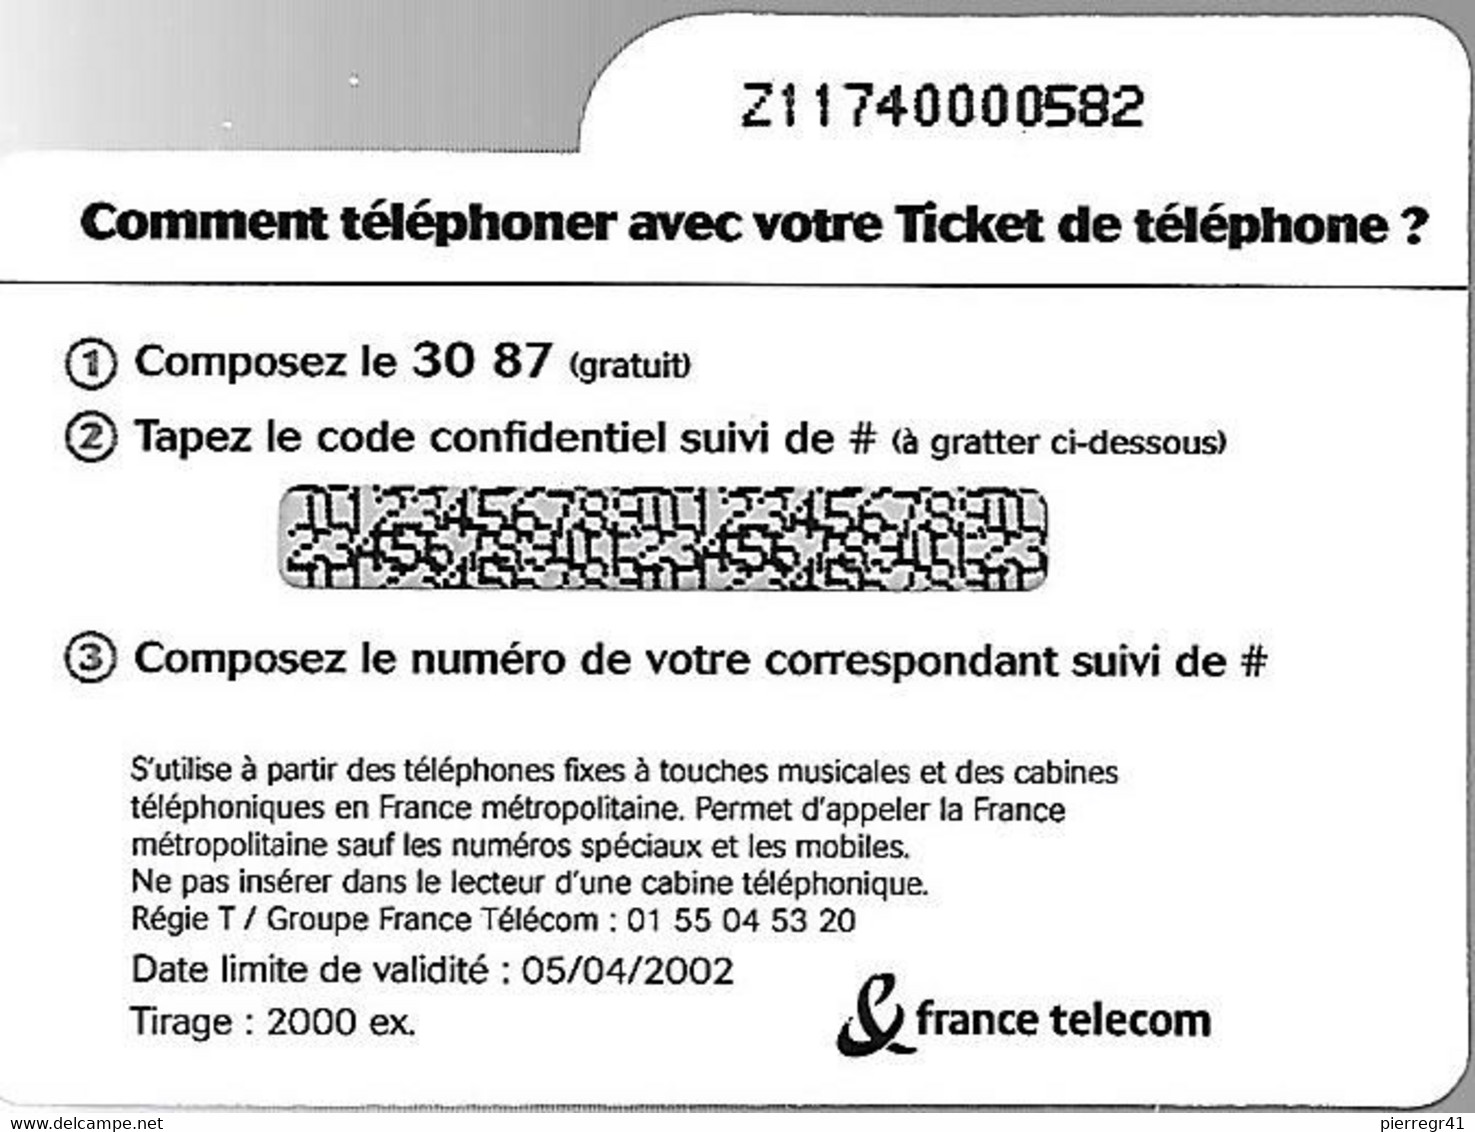 TICKET² TELEPHONE-PRIVE-FRANCE-TK-PR103-3Mn-La COTE En Poche-La Télécarte-Atout Collect 1-Neuf-TBE/RARE - FT Tickets